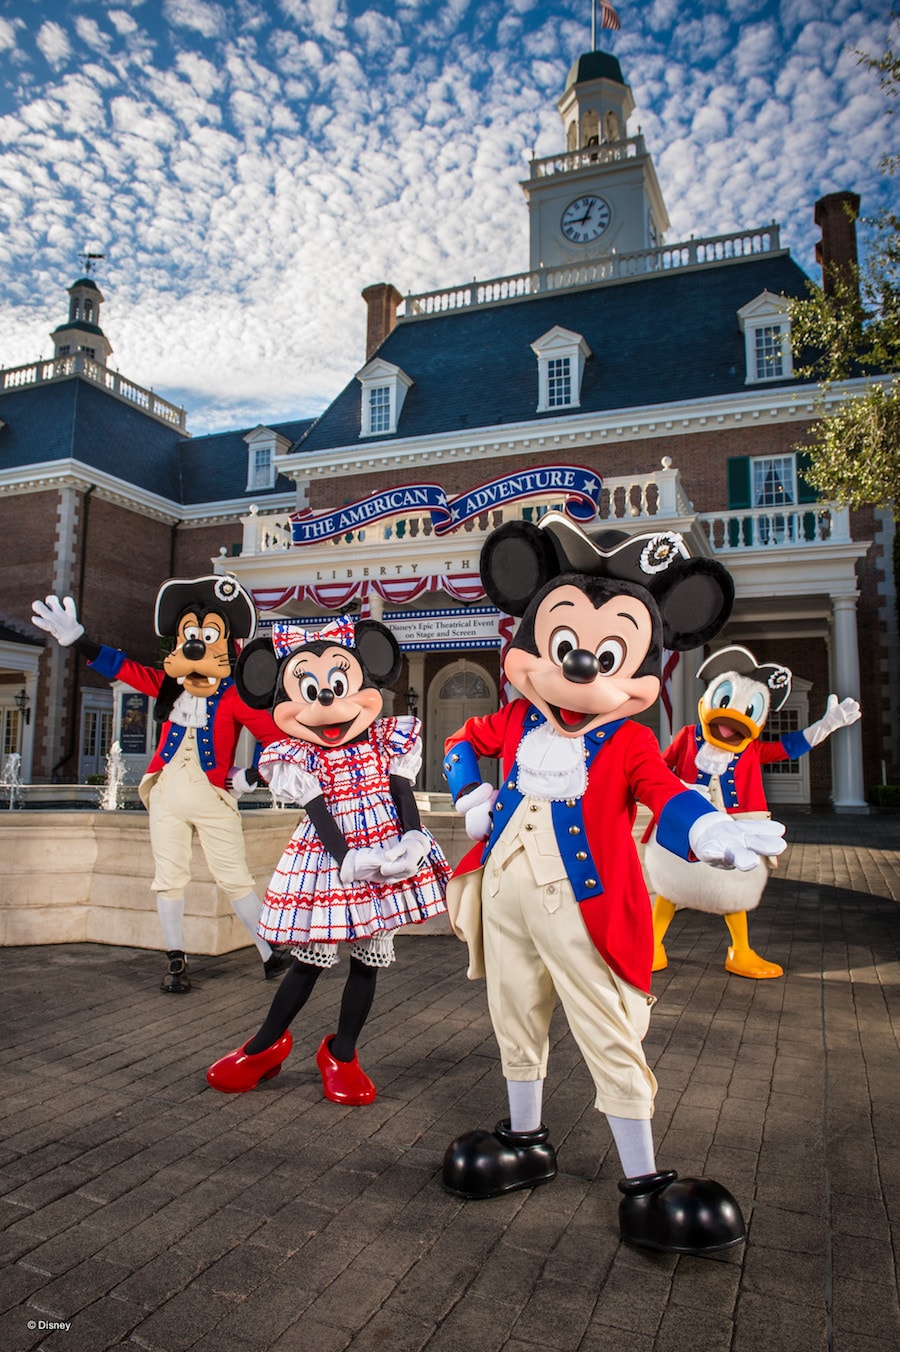 Celebrate America with Patriotic Photos from Disney PhotoPass